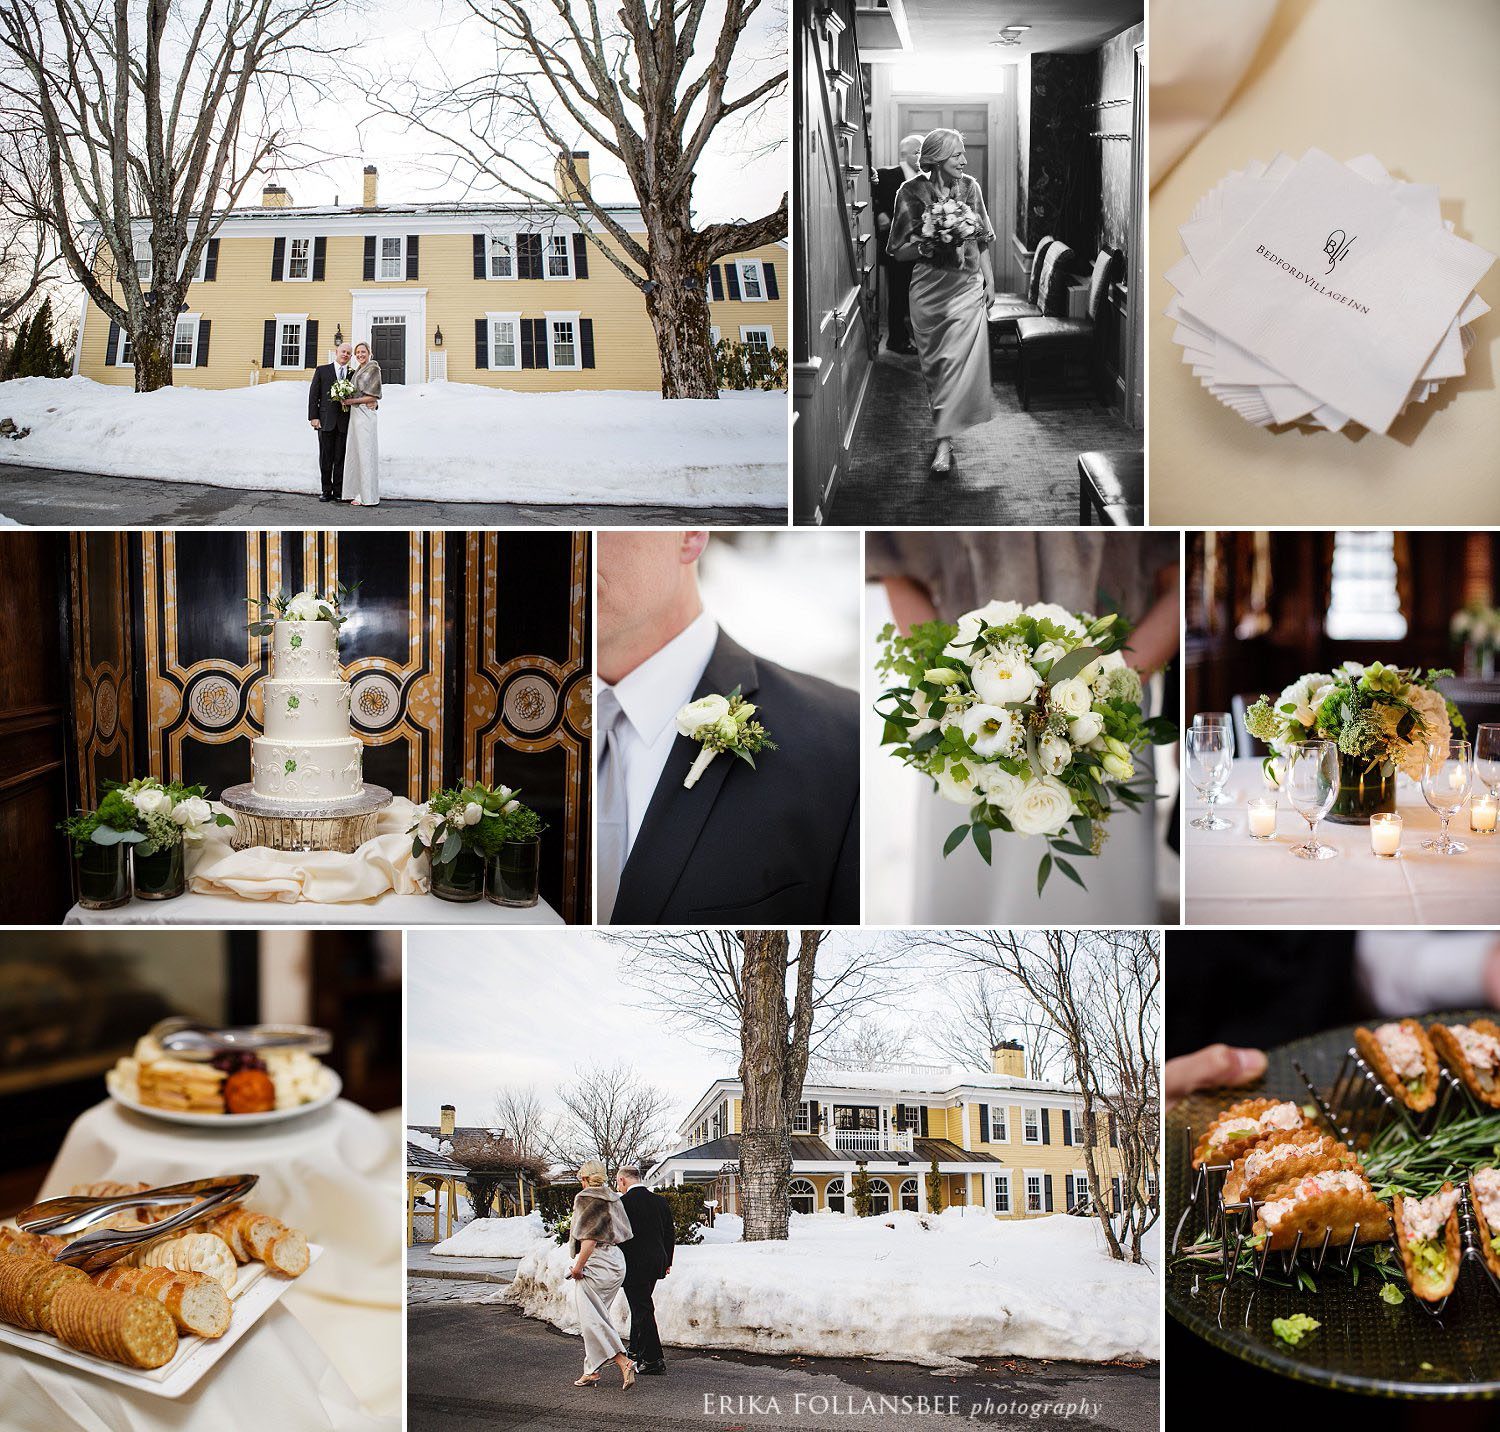 Bedford Village Inn Winter Wedding | Intimate & Elegant